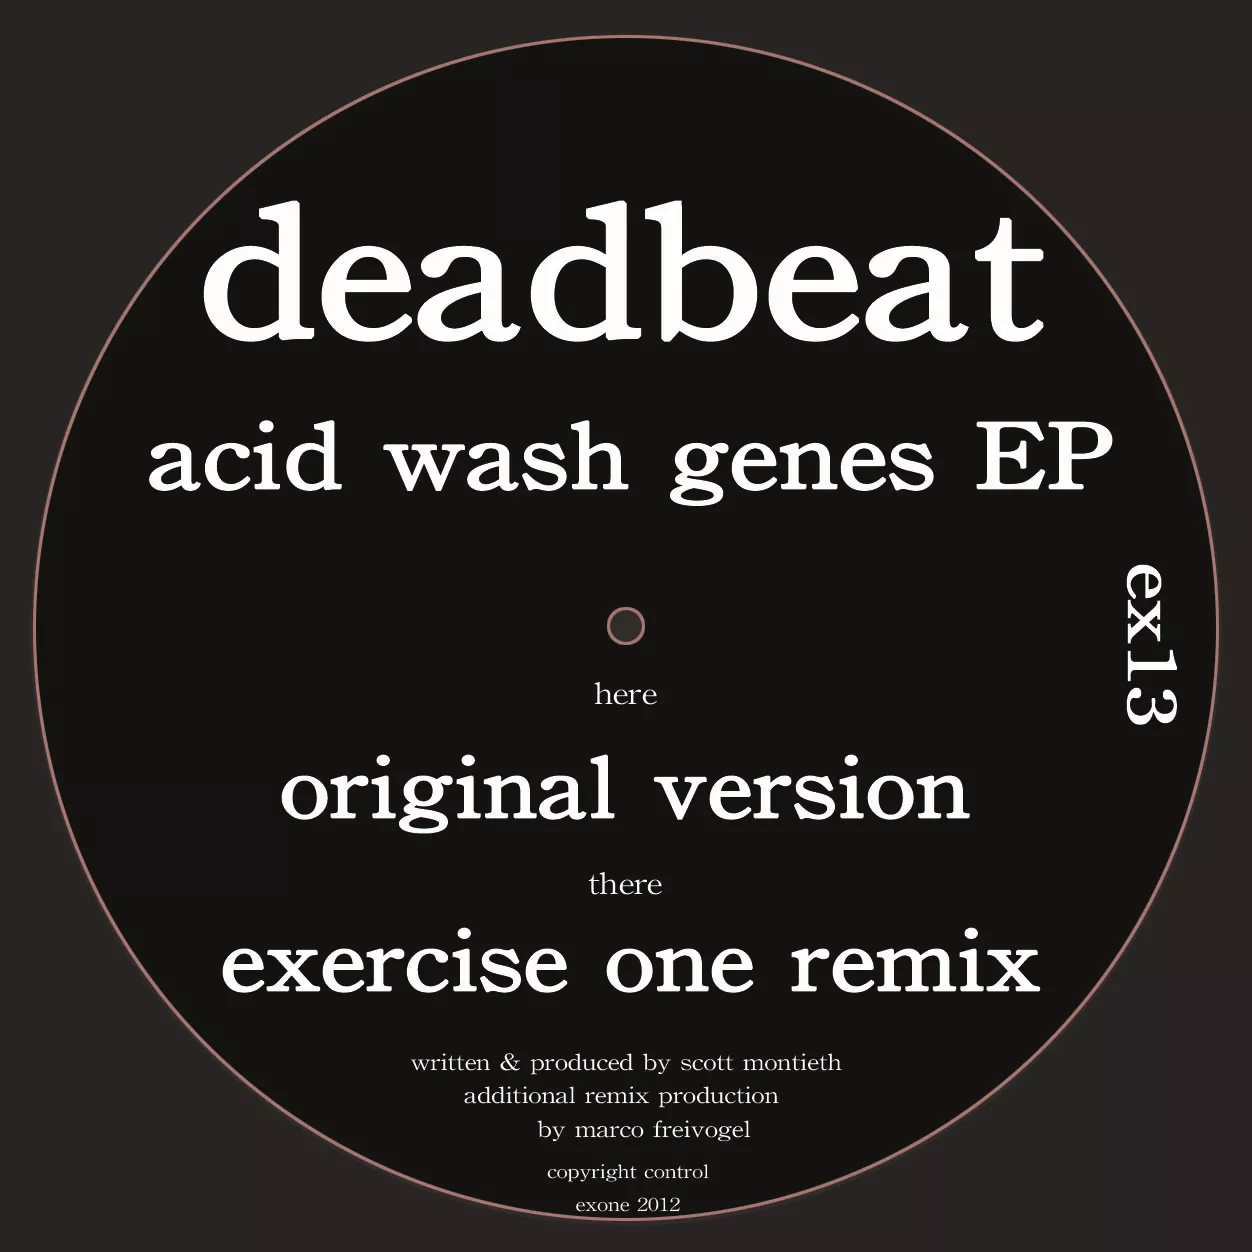 Acid Wash Genes EP - Deadbeat